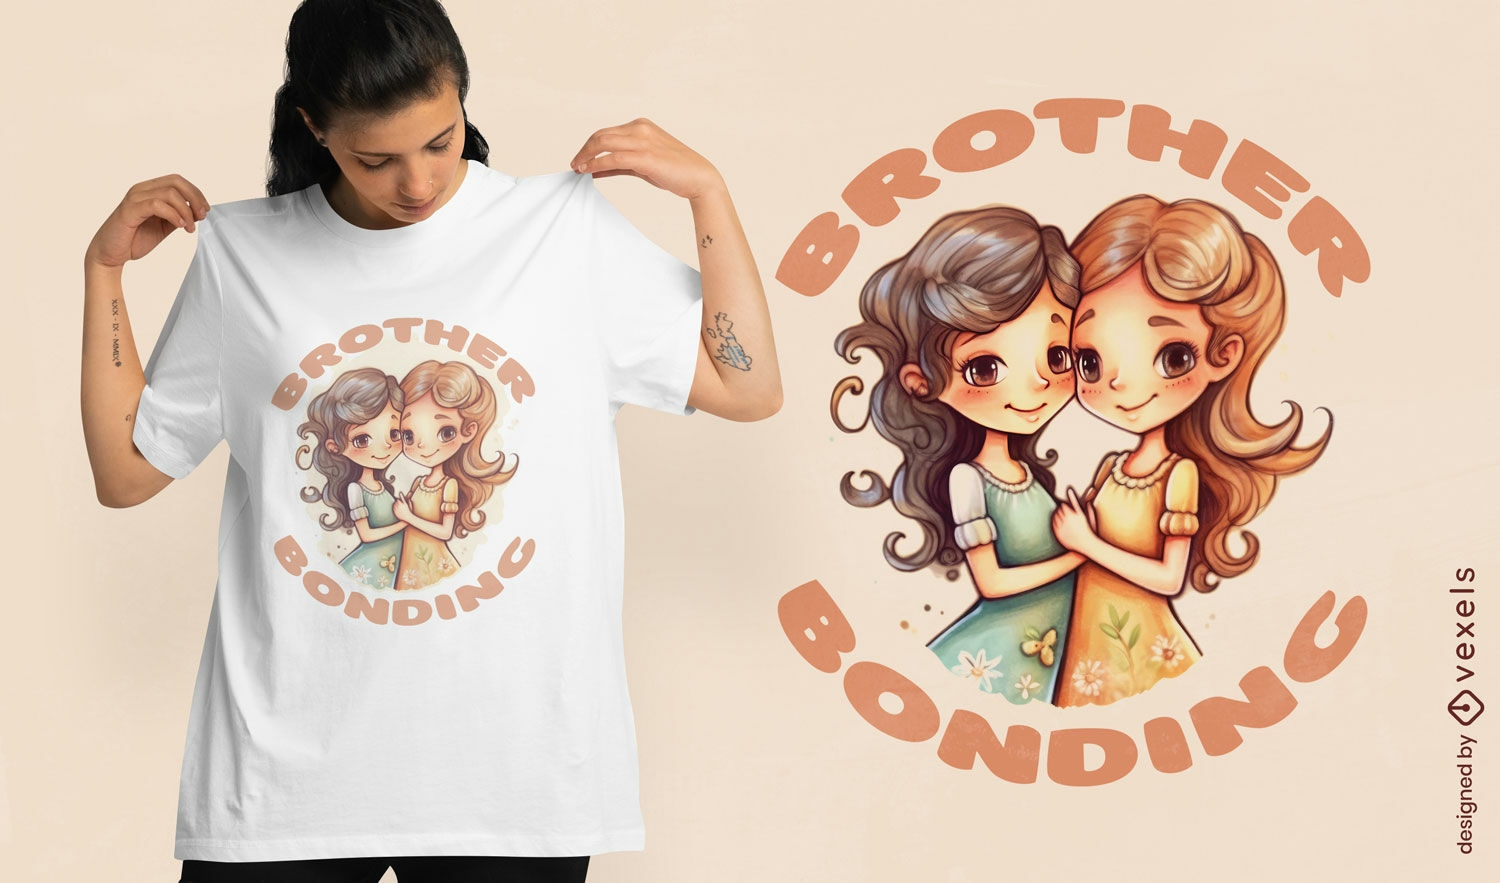 Sisterly bond cartoon t-shirt design